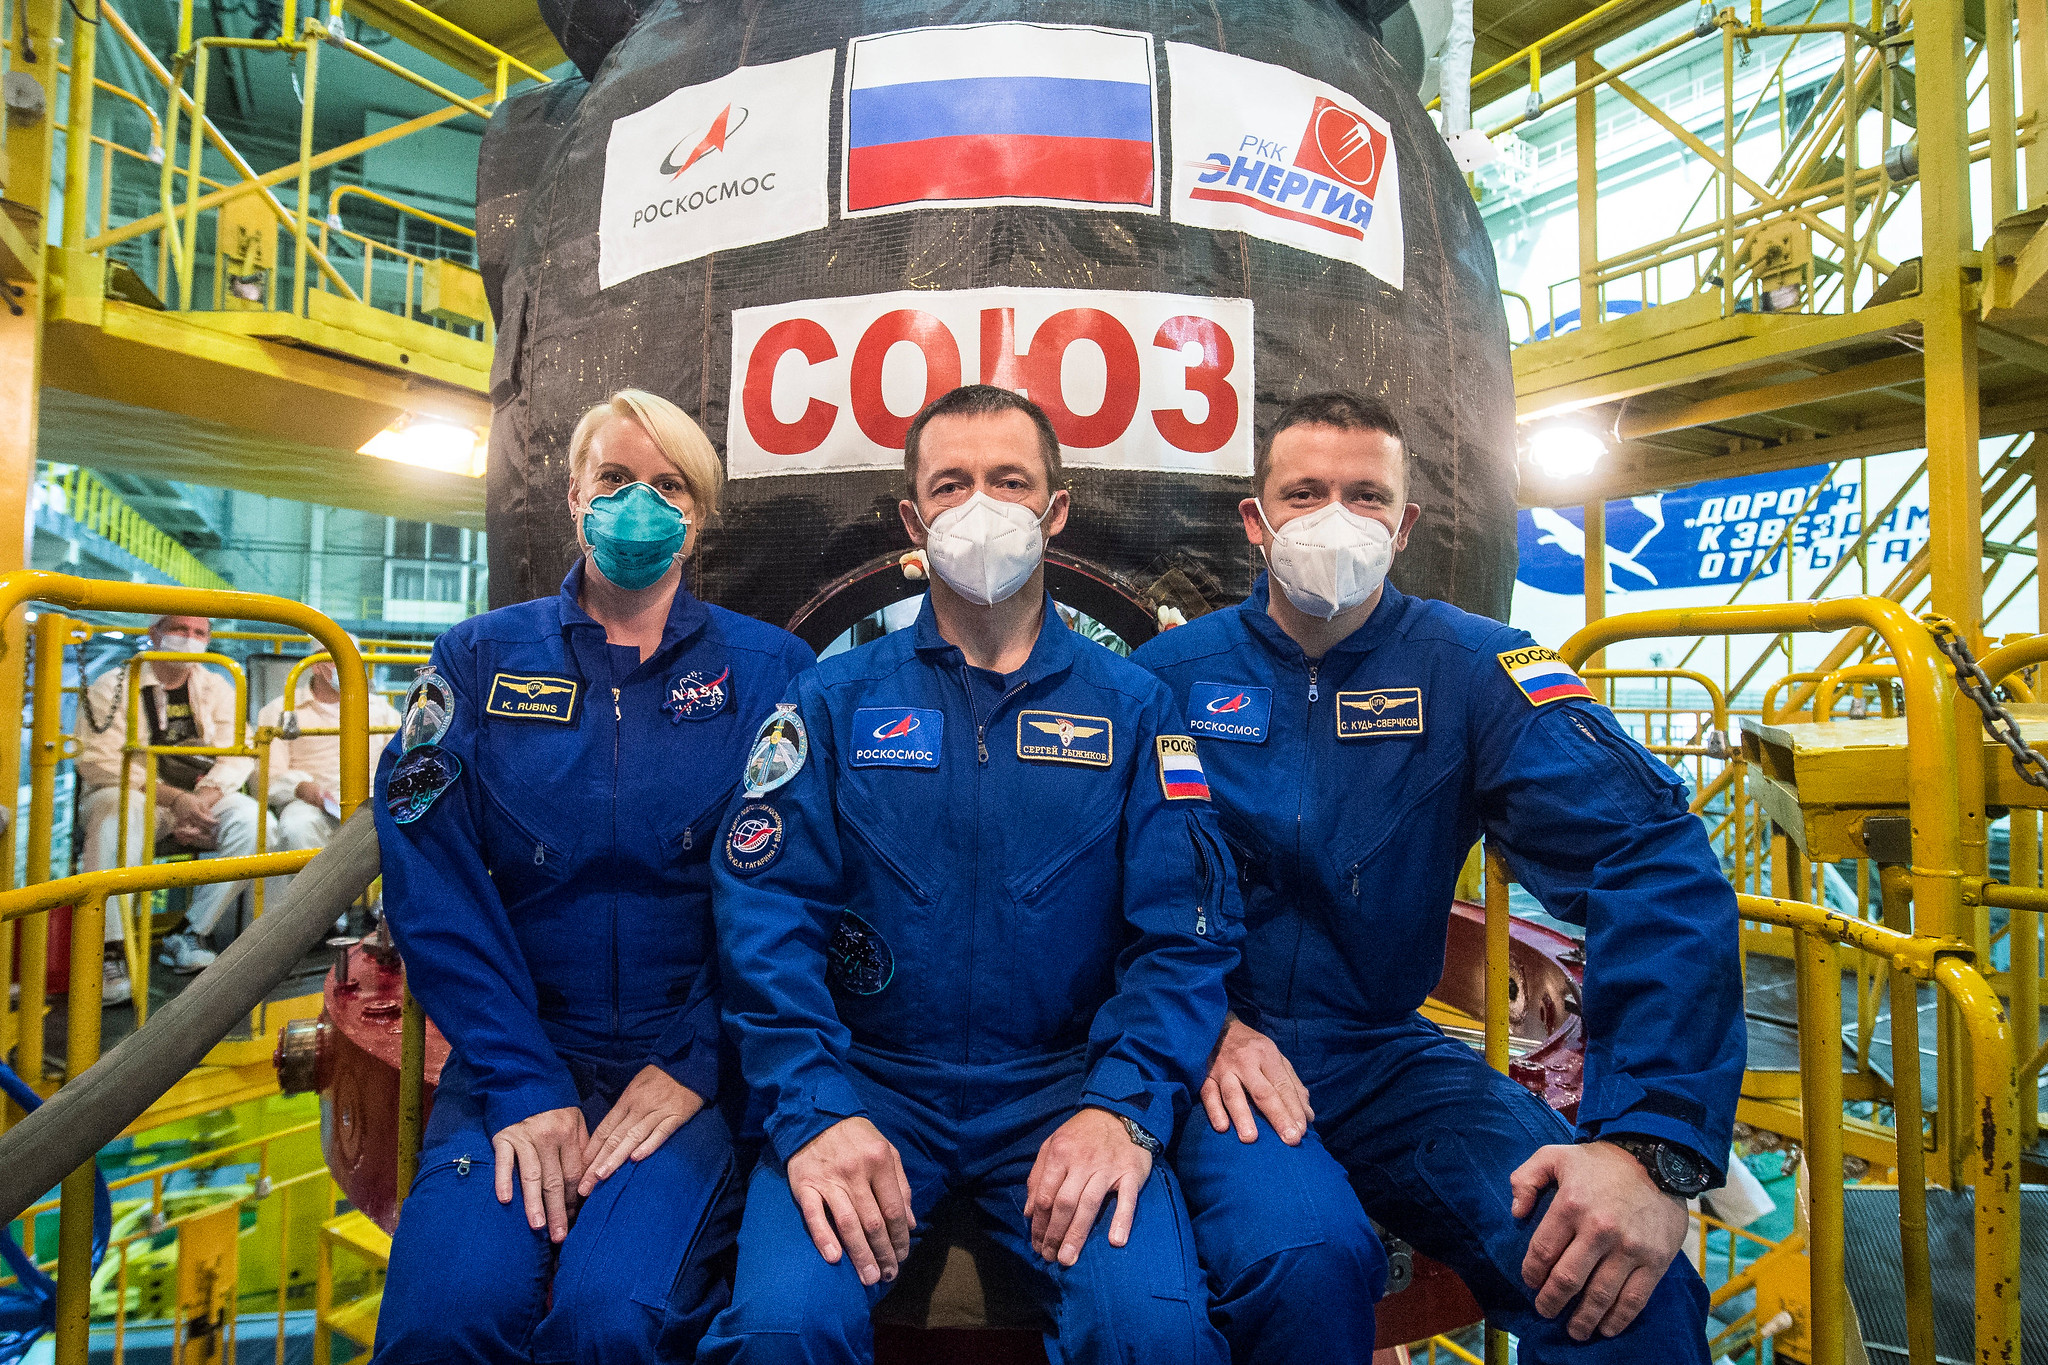 Expedition 64 NASA astronaut Kate Rubins and Russian cosmonauts Sergey Ryzhikov and Sergey Kud-Sverchkov of Roscosmos